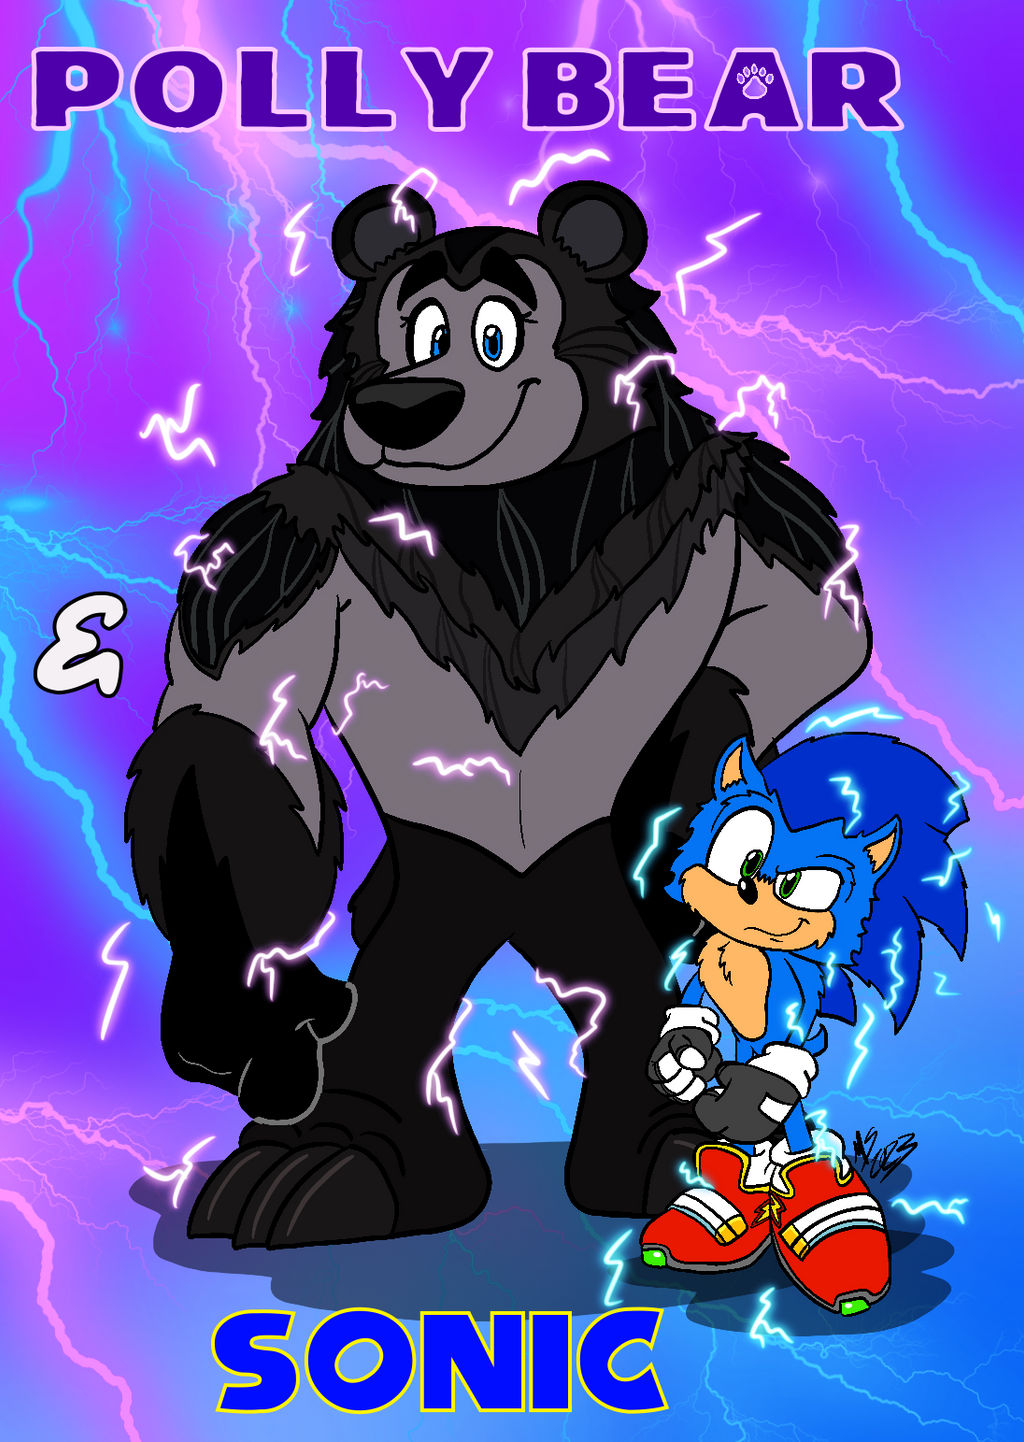 Sonic The Hedgehog 1991 Poster by Rocket04 -- Fur Affinity [dot] net